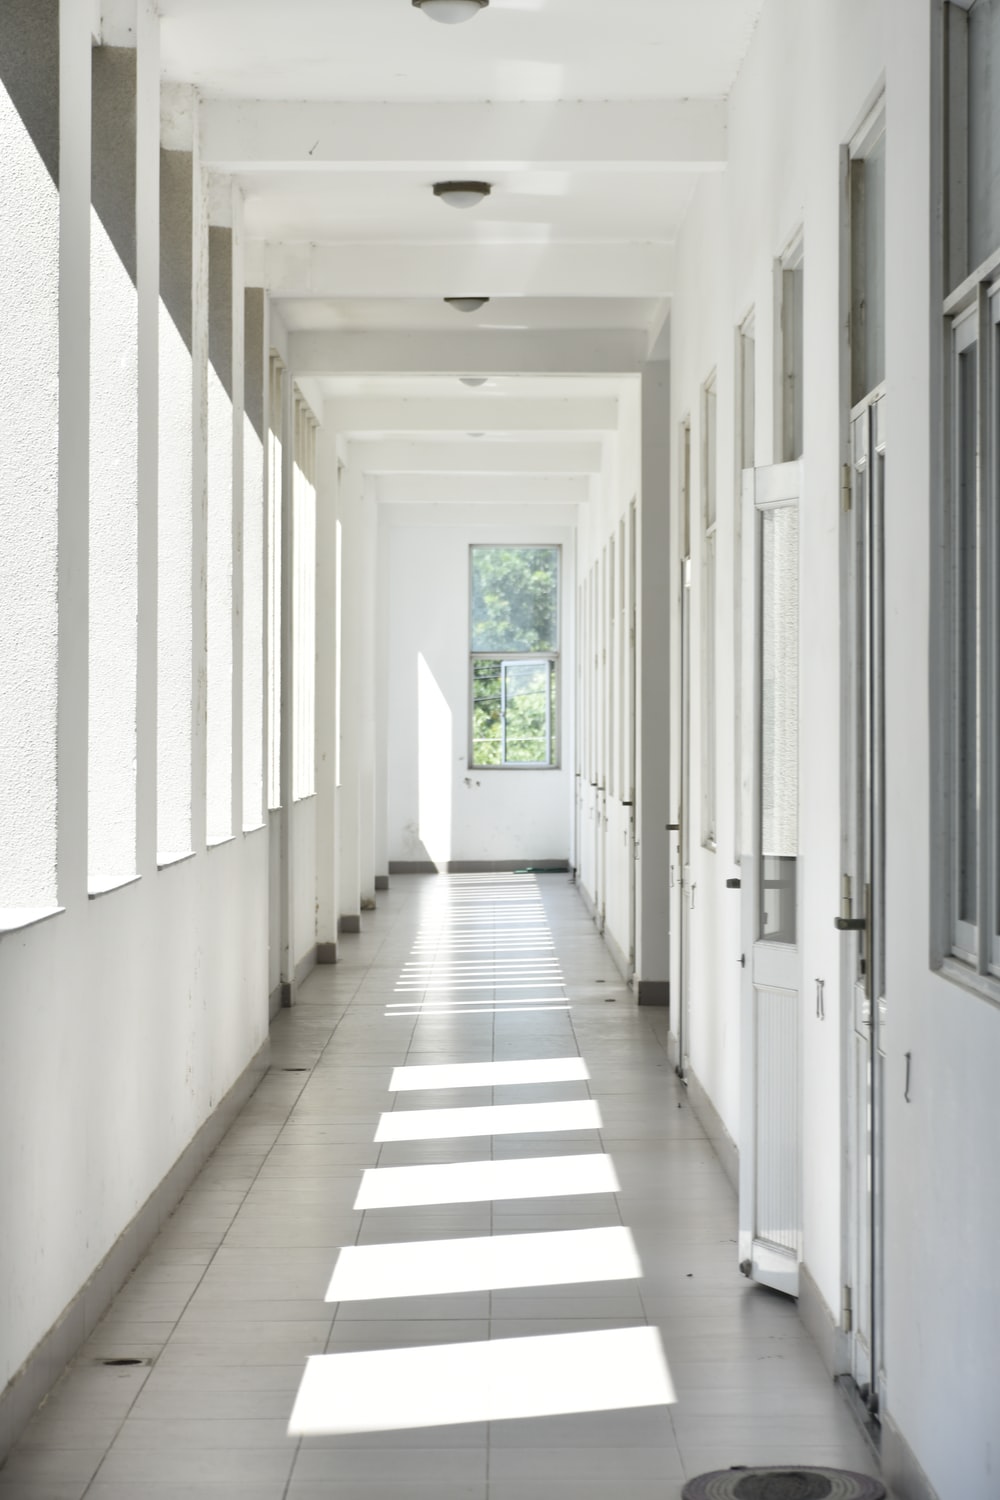 School Corridor Picture. Download Free Image